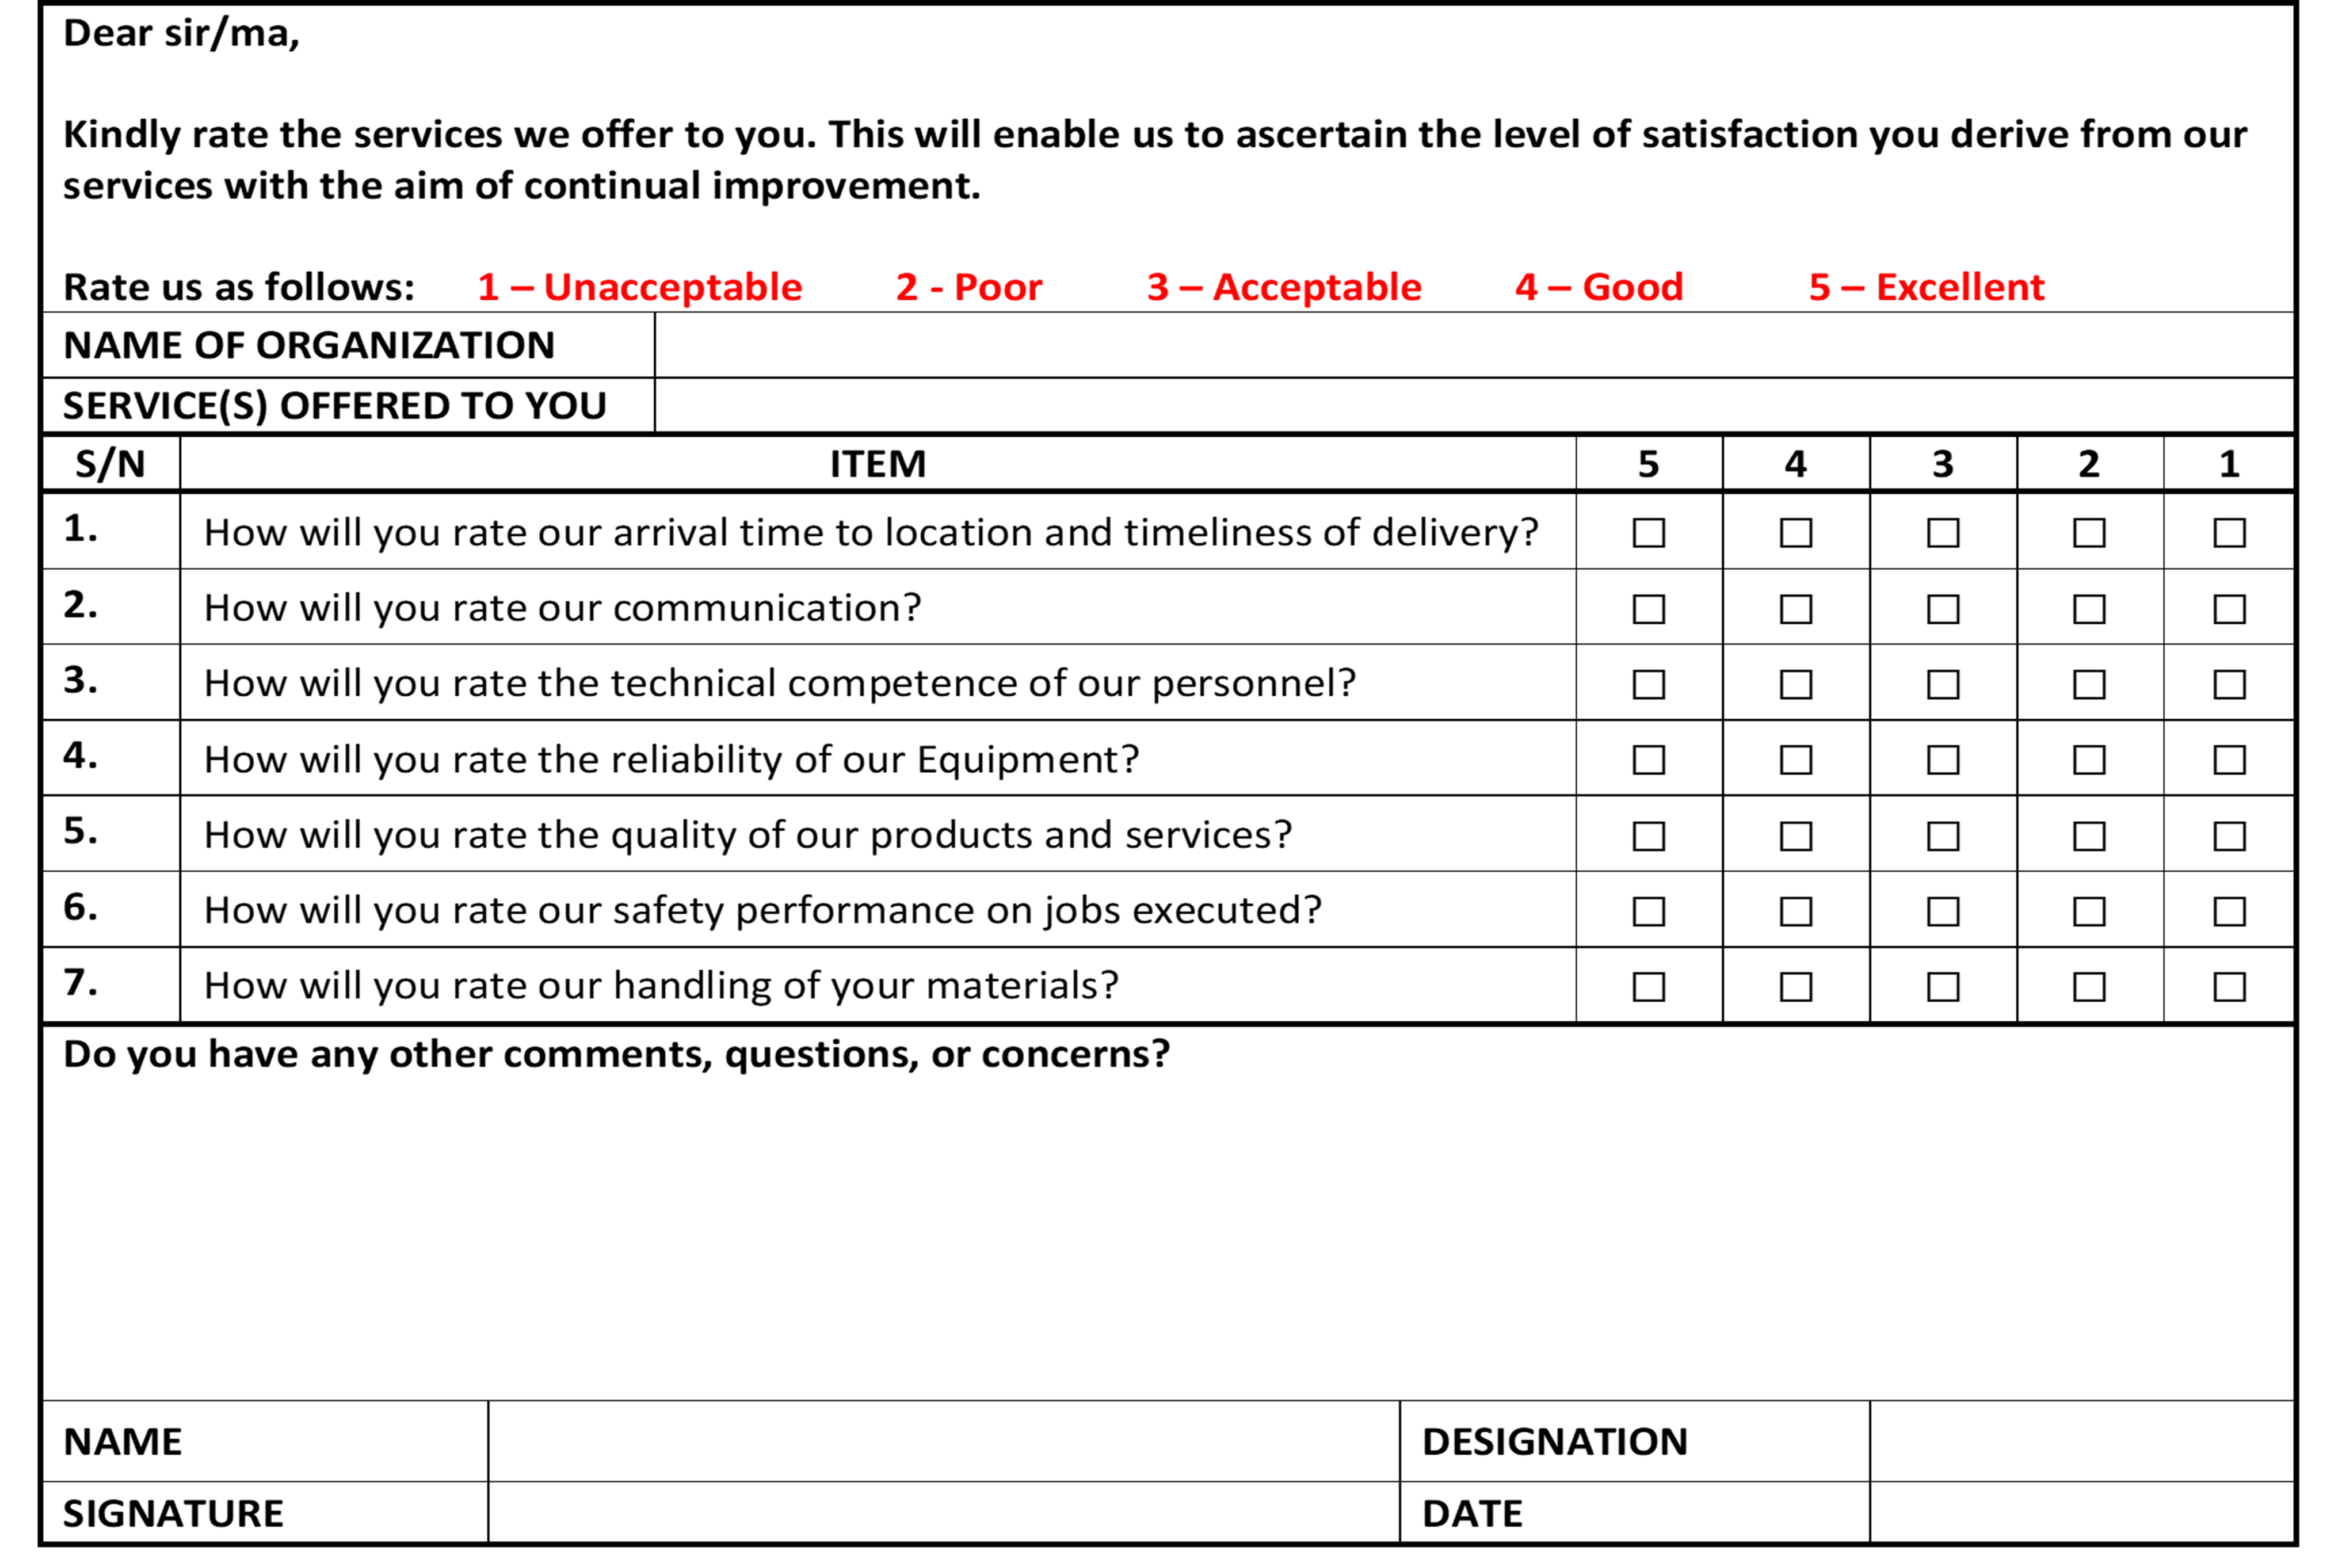 Figure 38: Customer feedback survey questionnaire